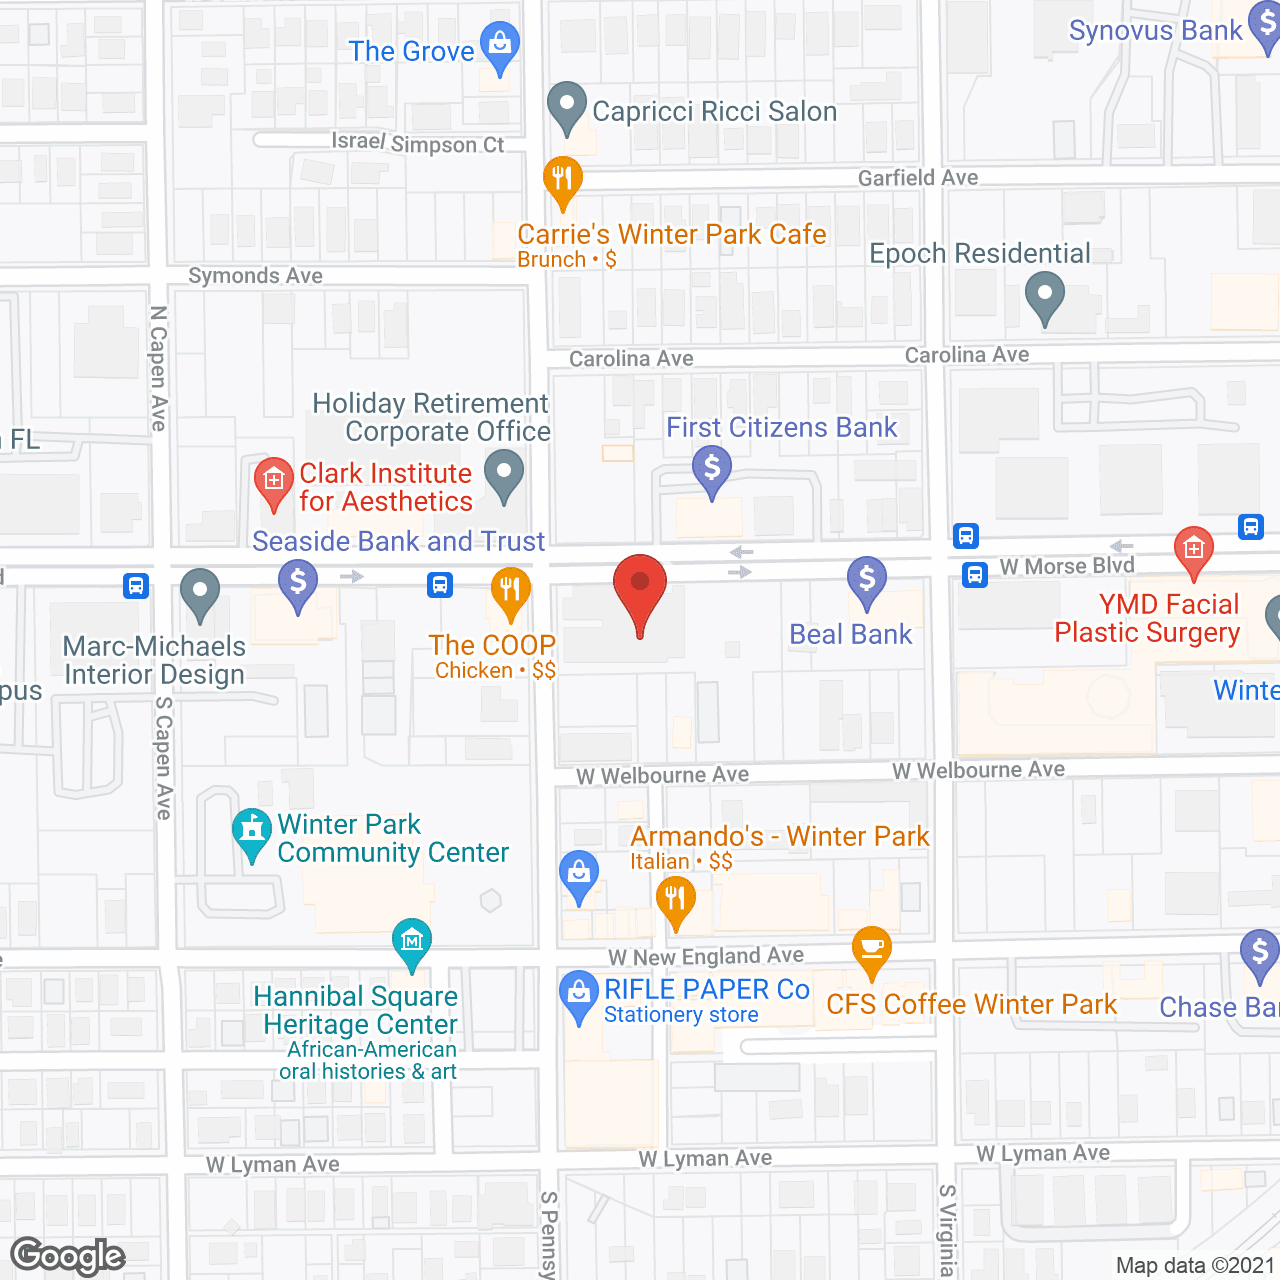 The Gardens at DePugh Nursing Center in google map